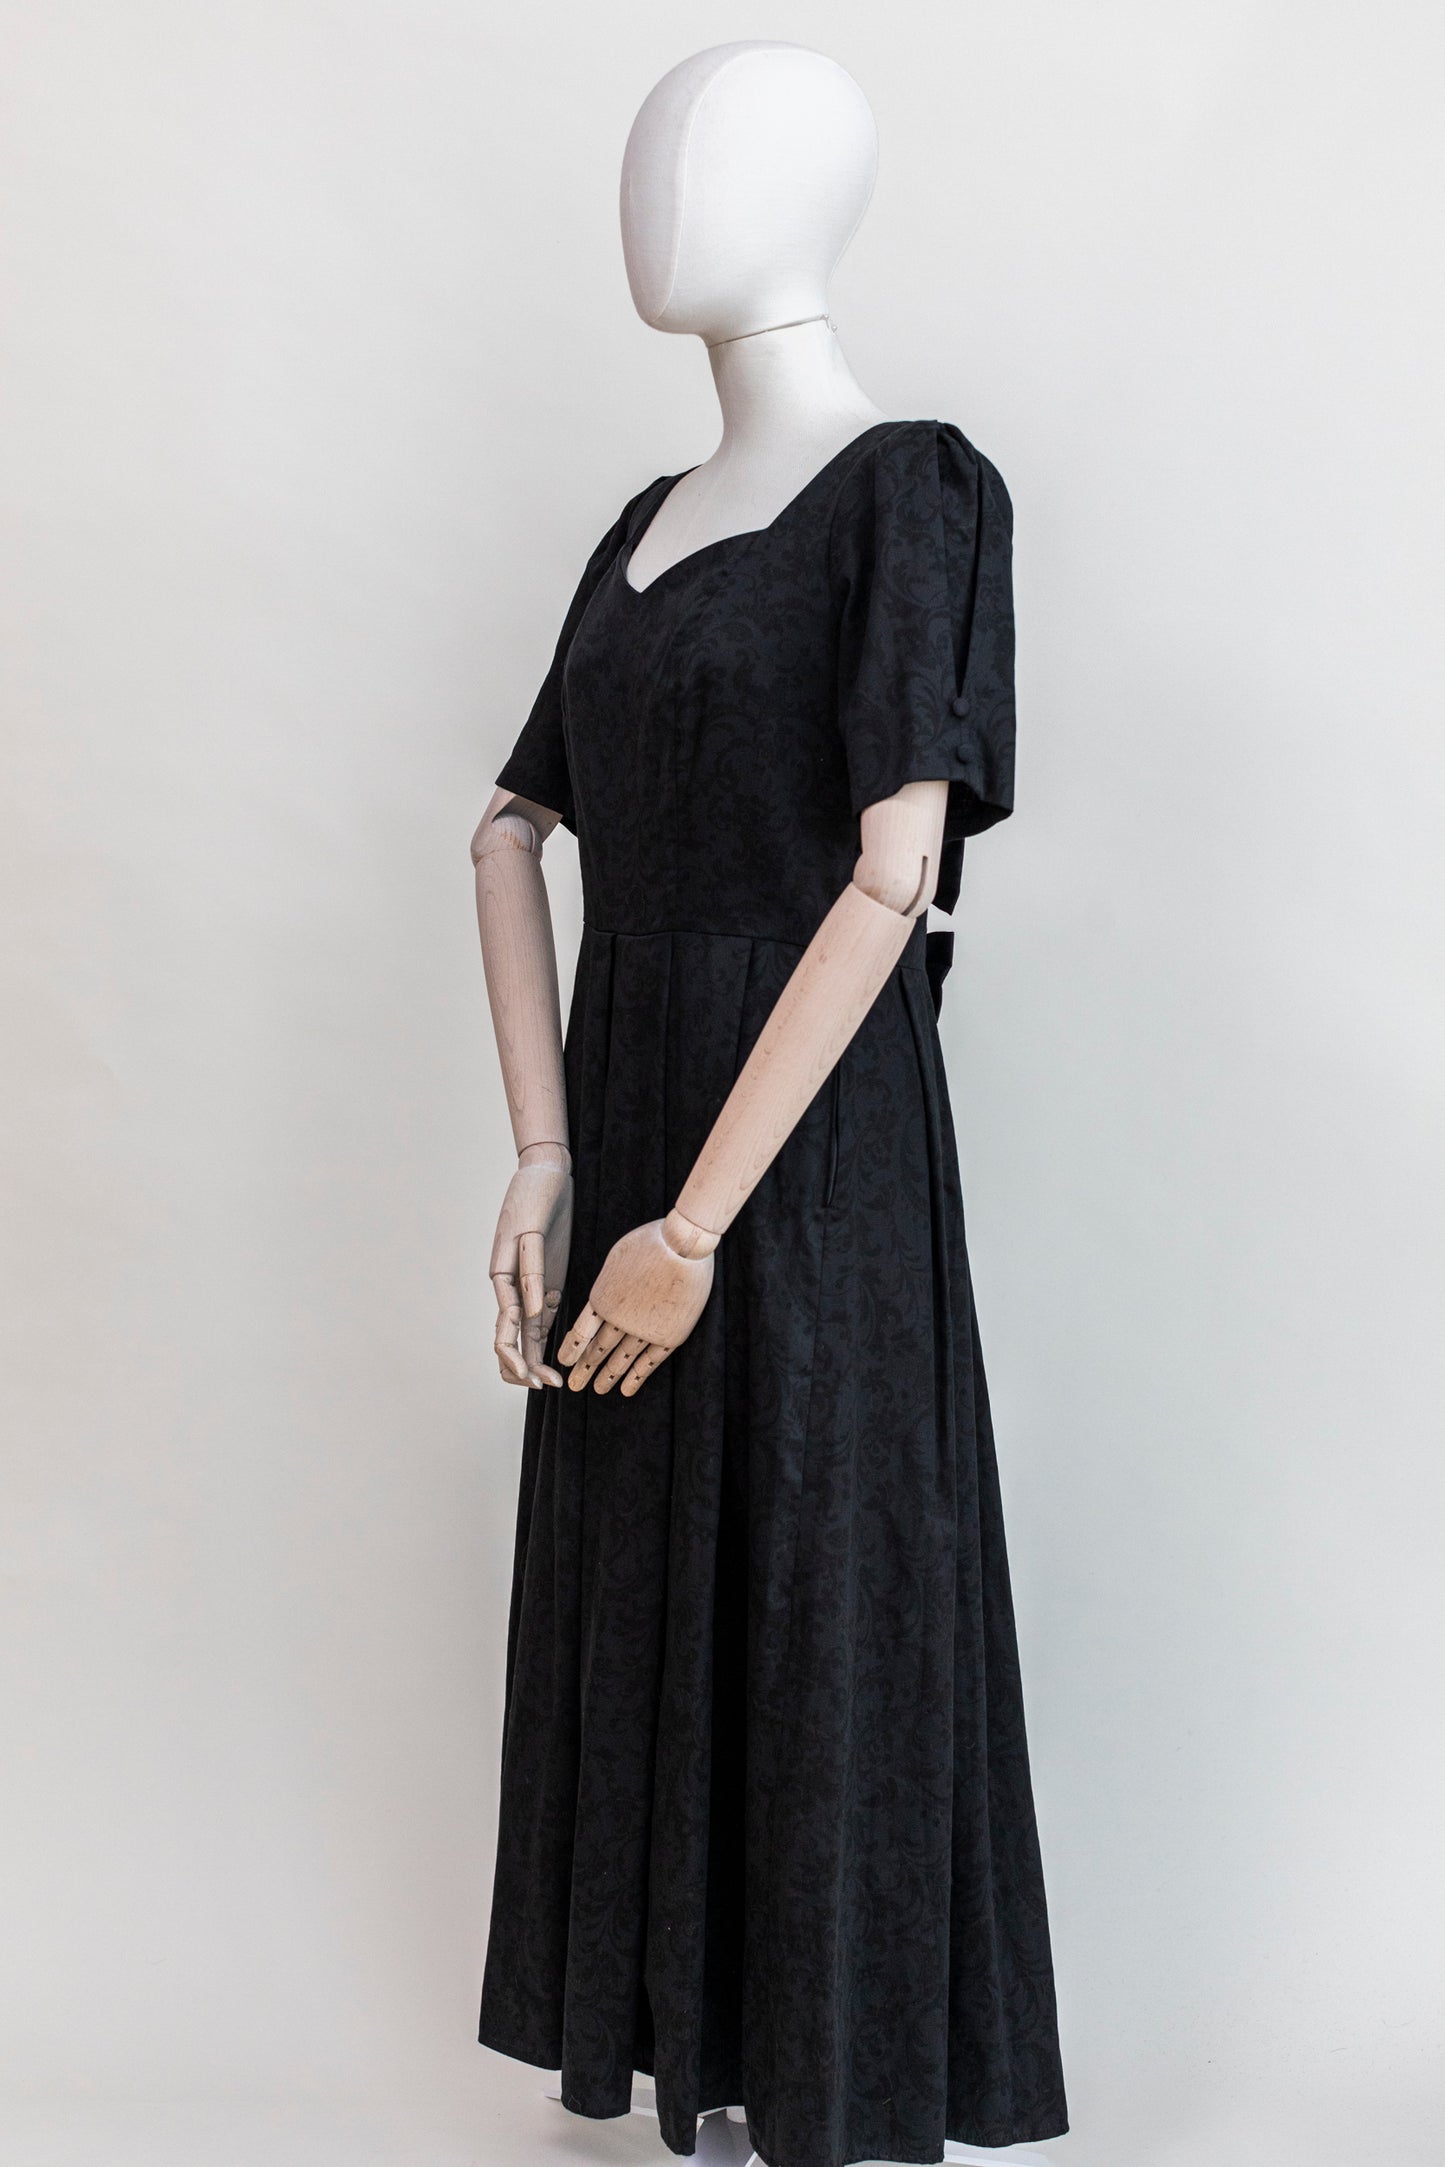 1990s Vintage Laura Ashley Black Open Back Dress - Size S